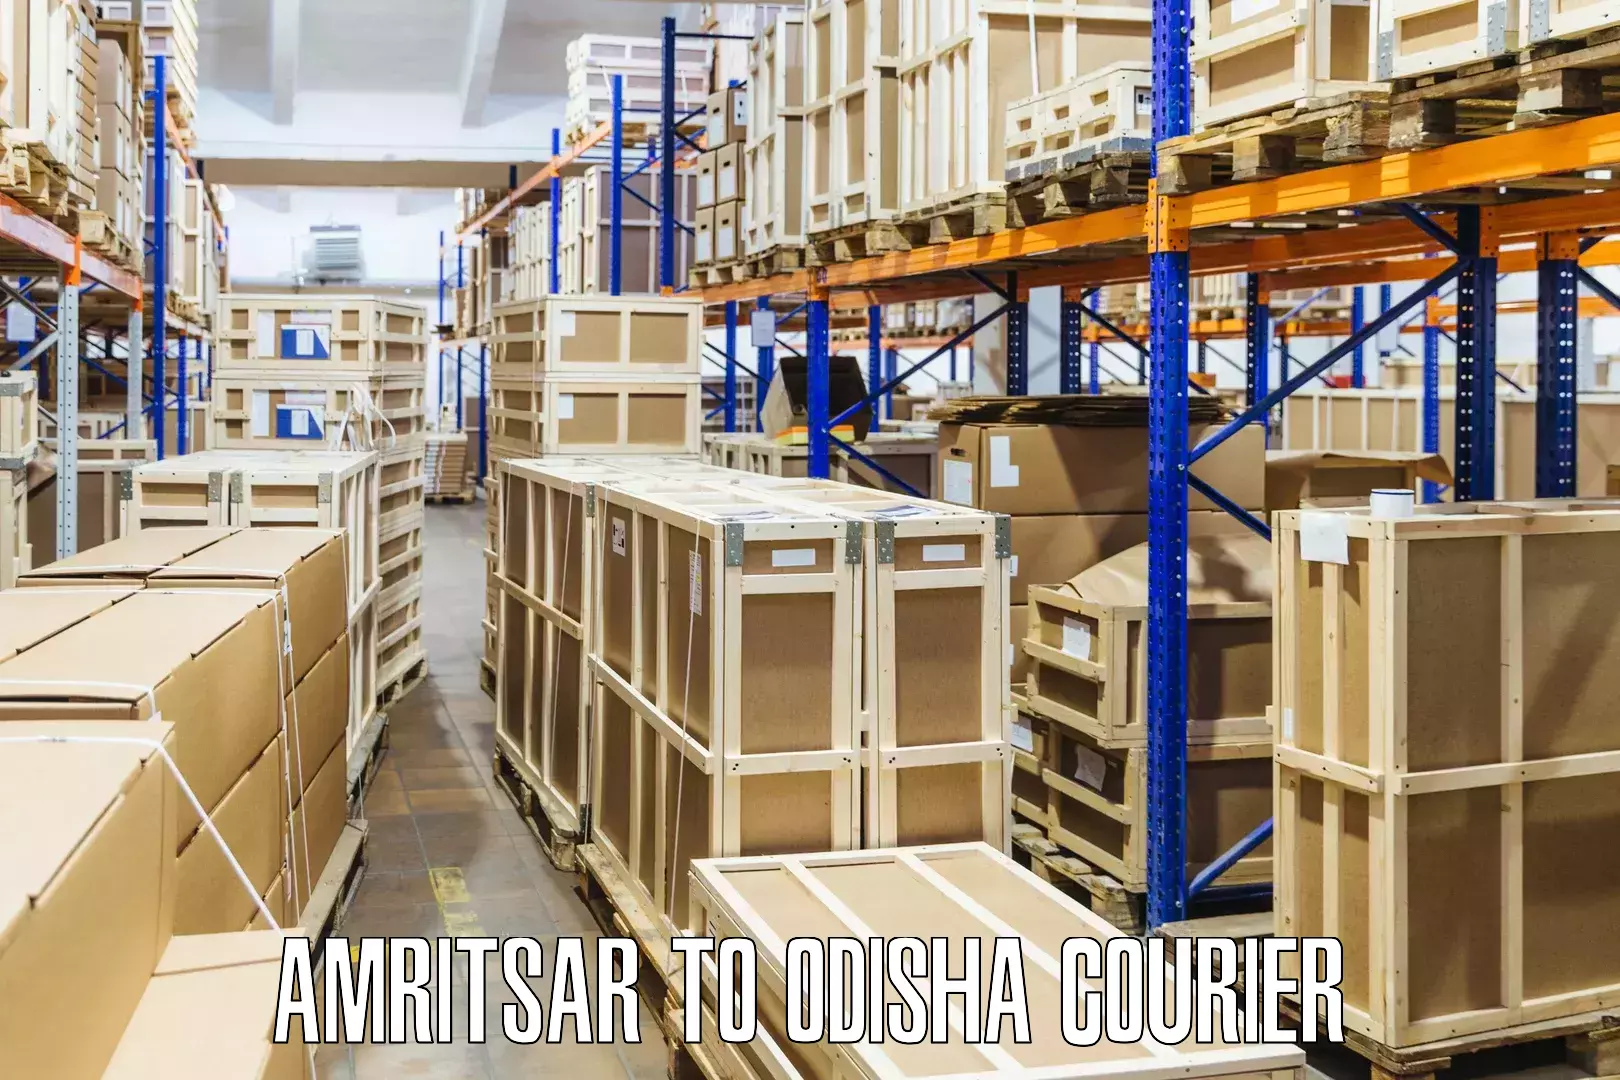 Express logistics providers Amritsar to Odisha